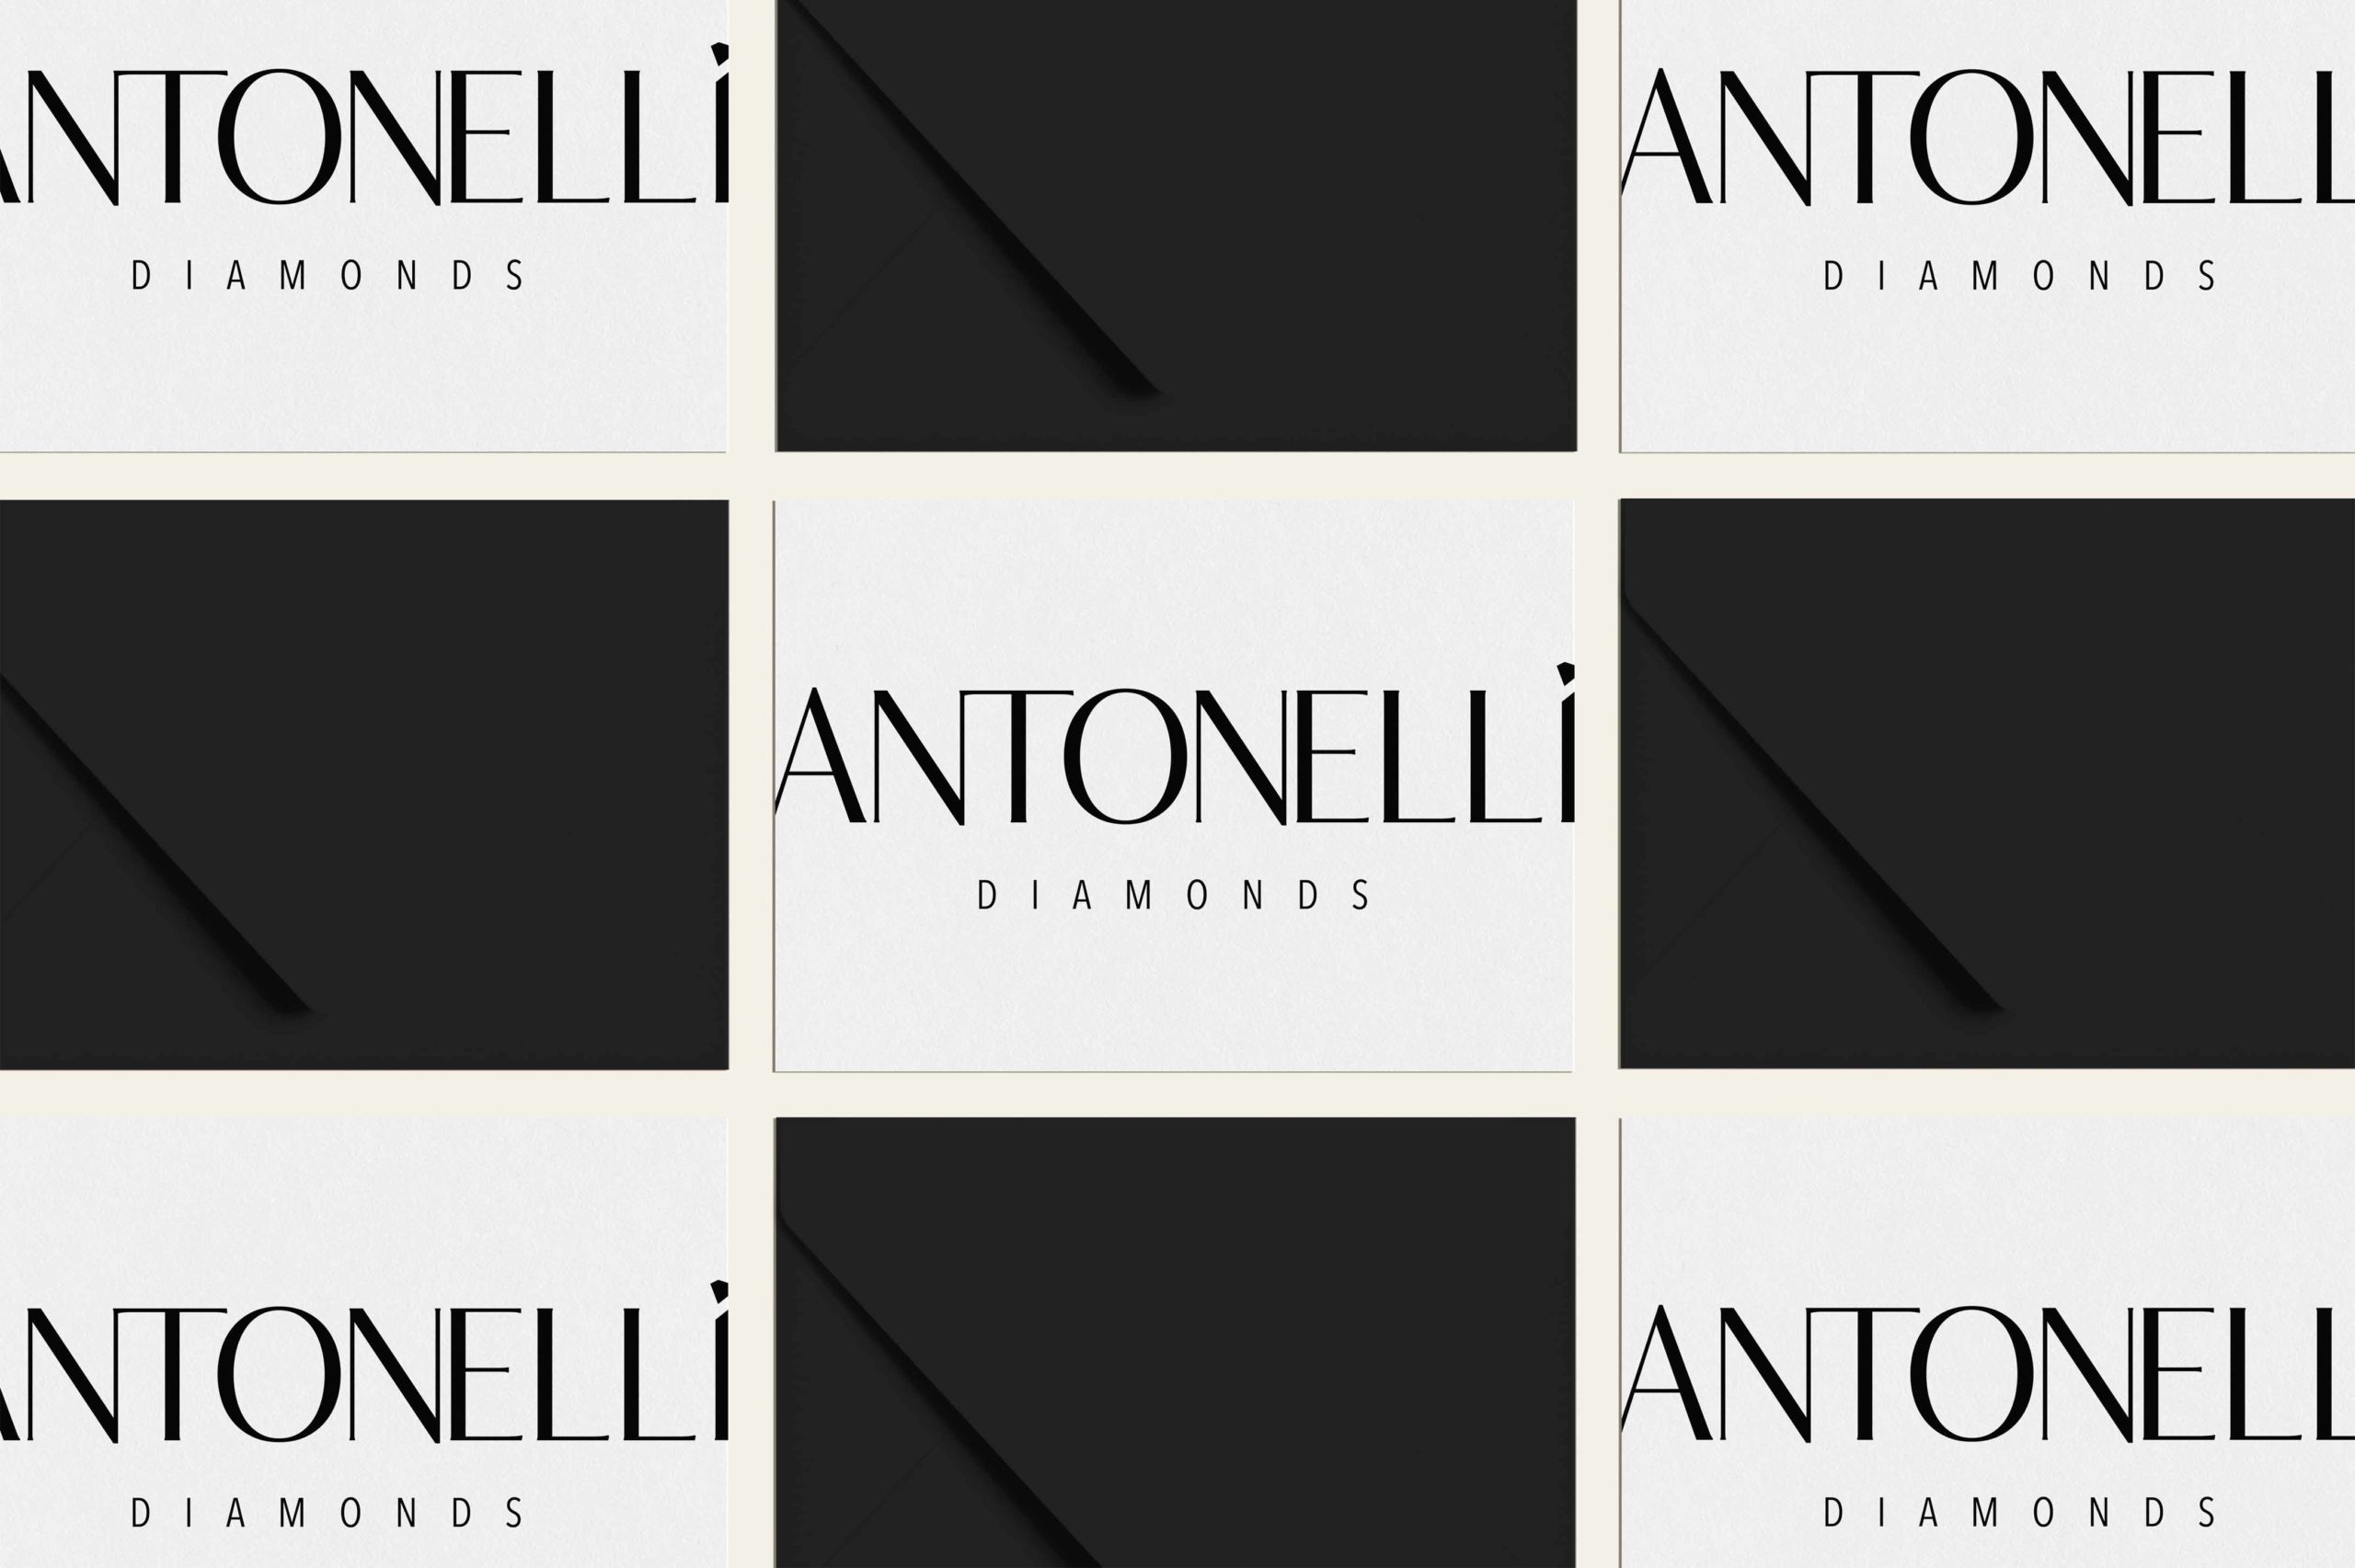 Antonelli Diamonds the best jewelry marketing advertising branding agency Lombardo